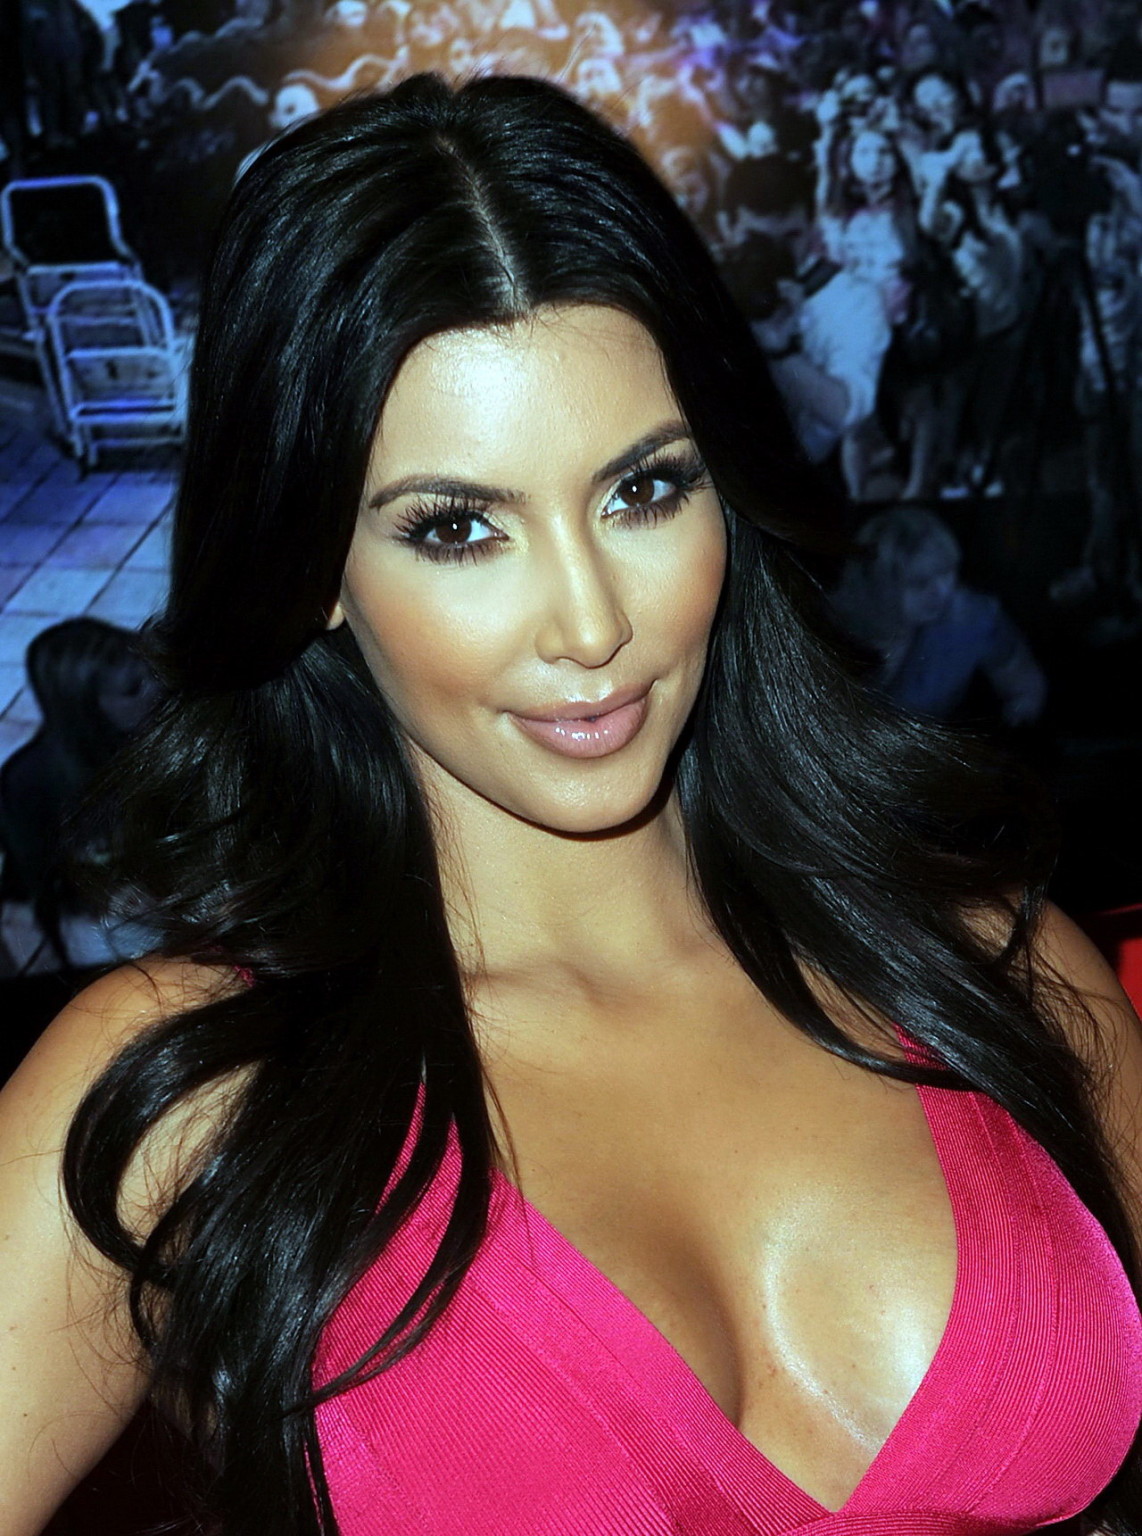 Kim Kardashian en robe rose moulante posant avec son mannequin de cire chez Madame Tus.
 #75342606